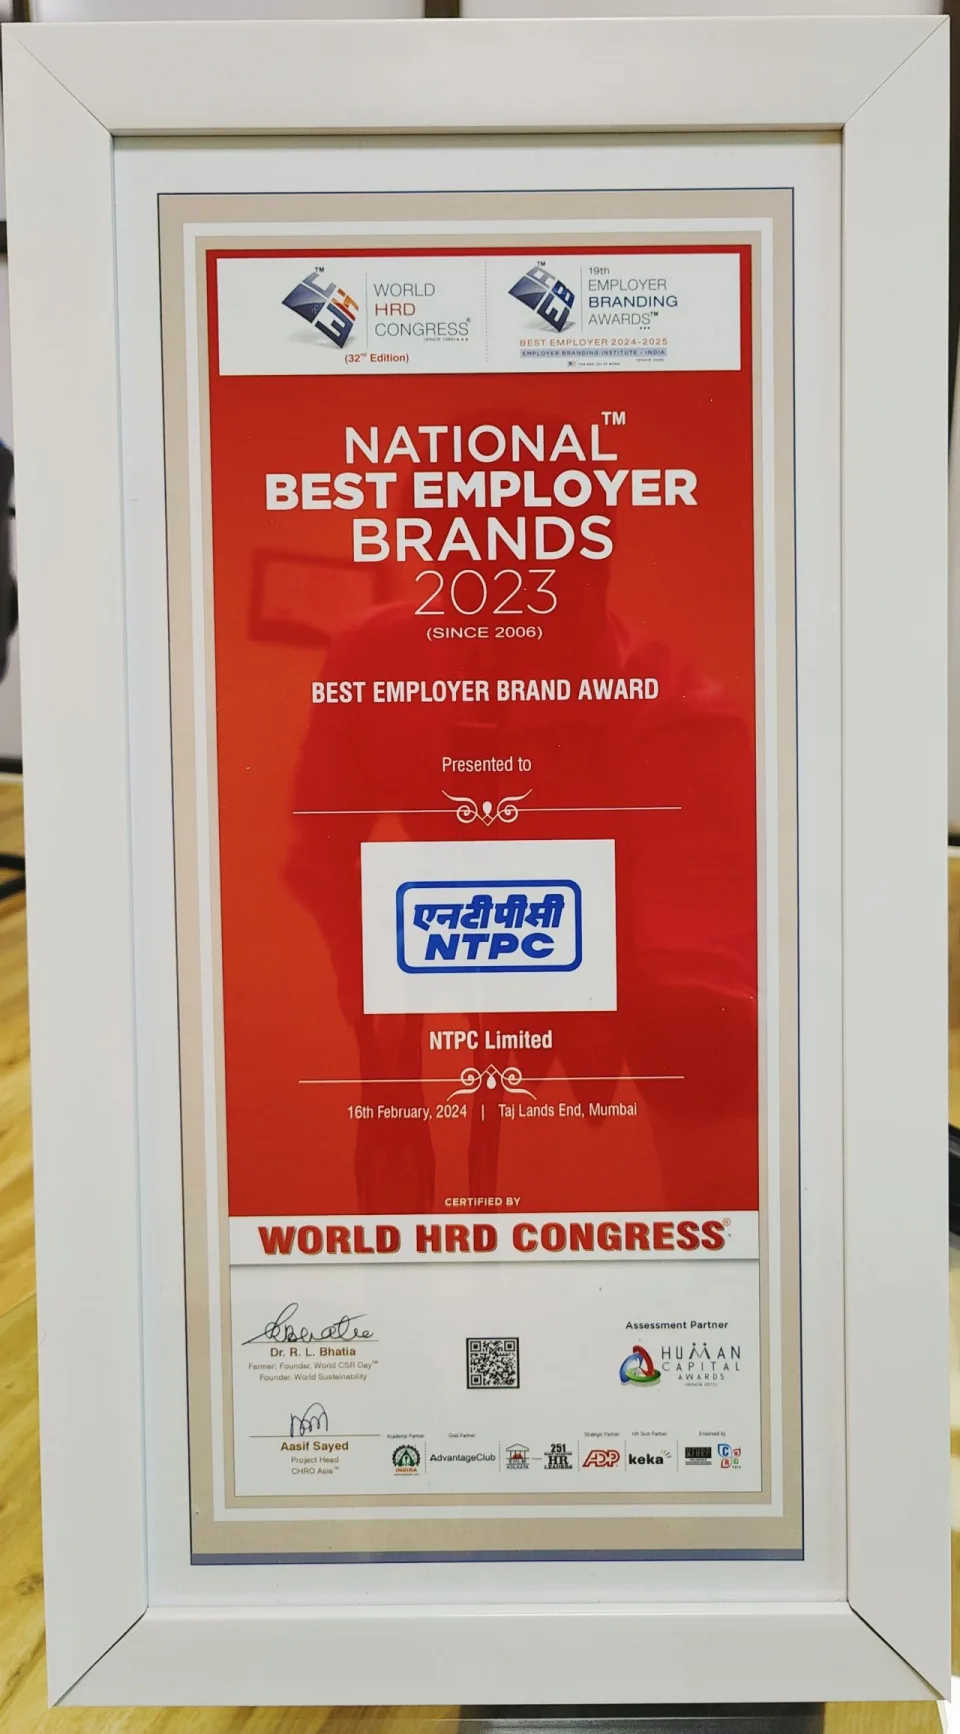 NTPC wins the “Best Employer Brand Award”